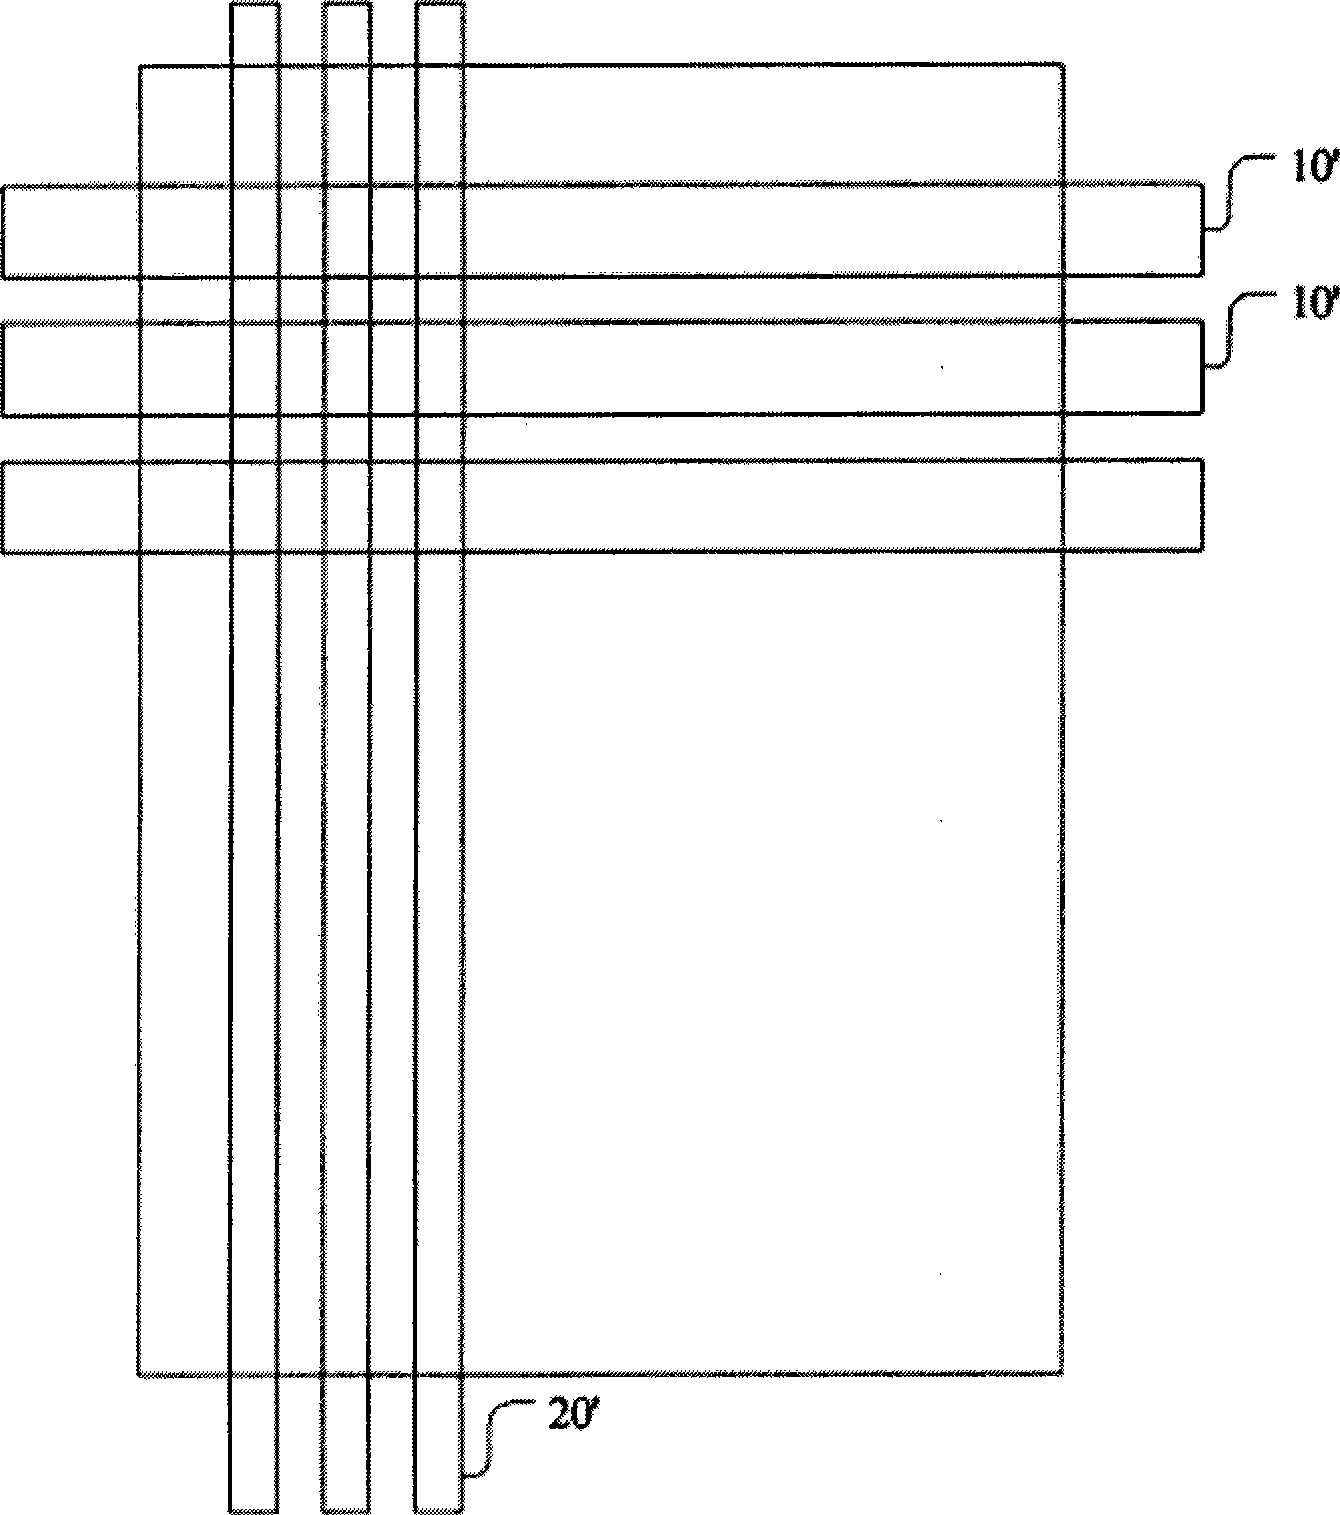 Pixel circuit of display panel